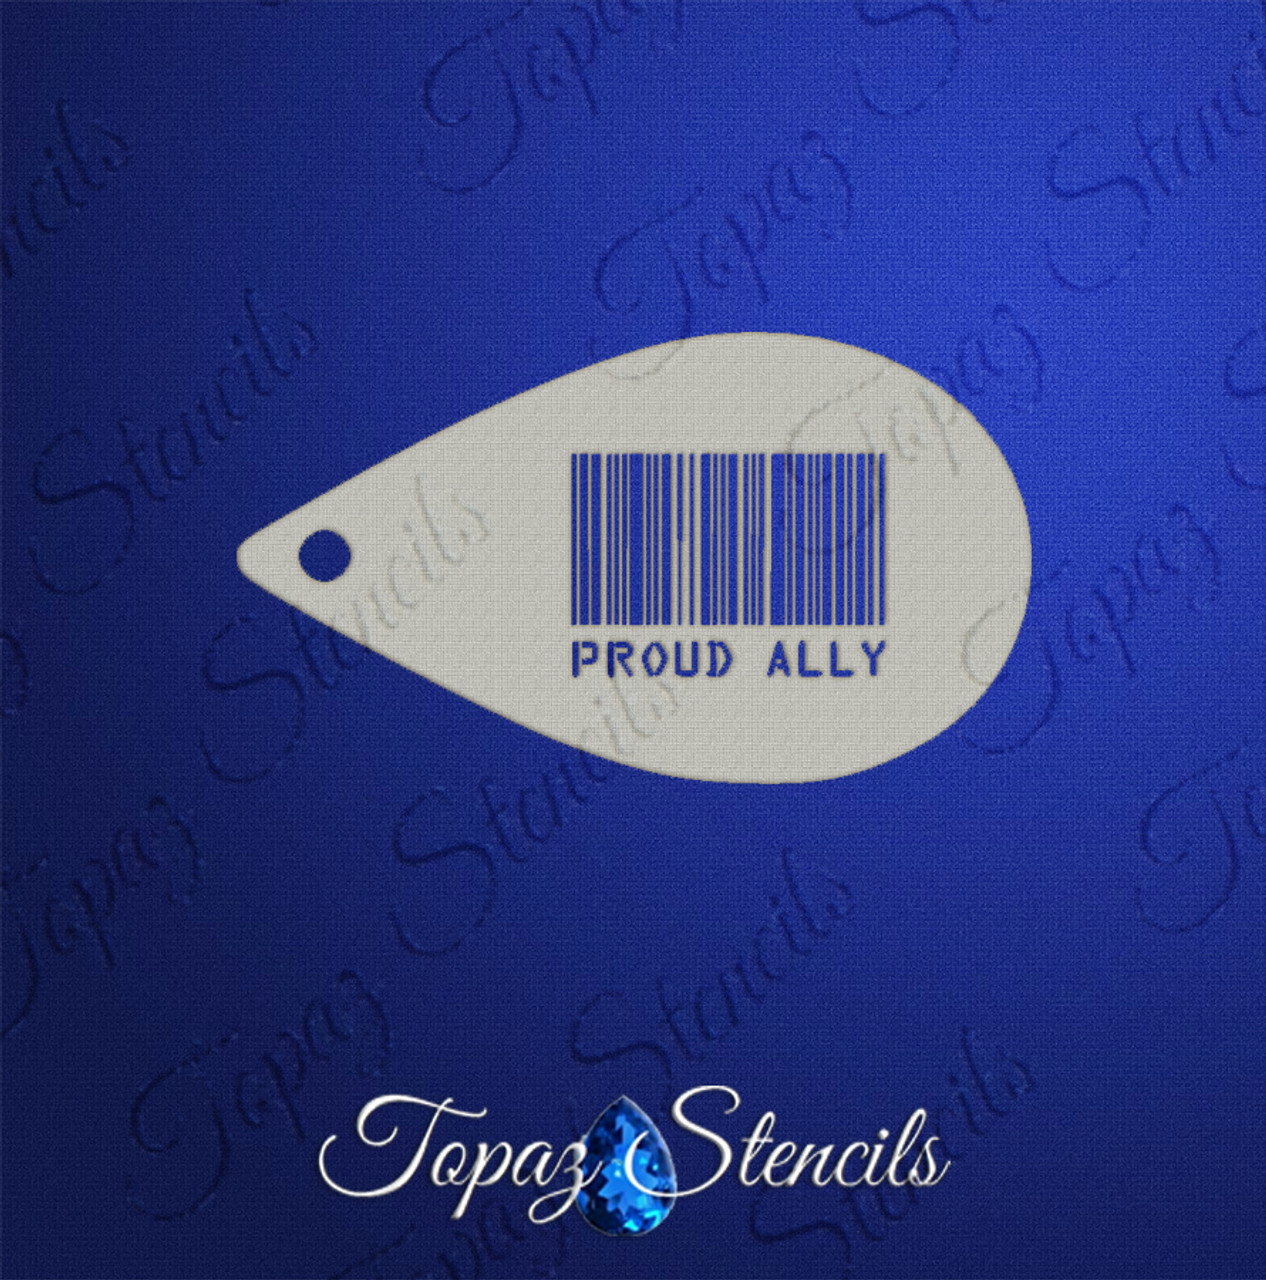 Proud Ally Barcode - Topaz Stencils